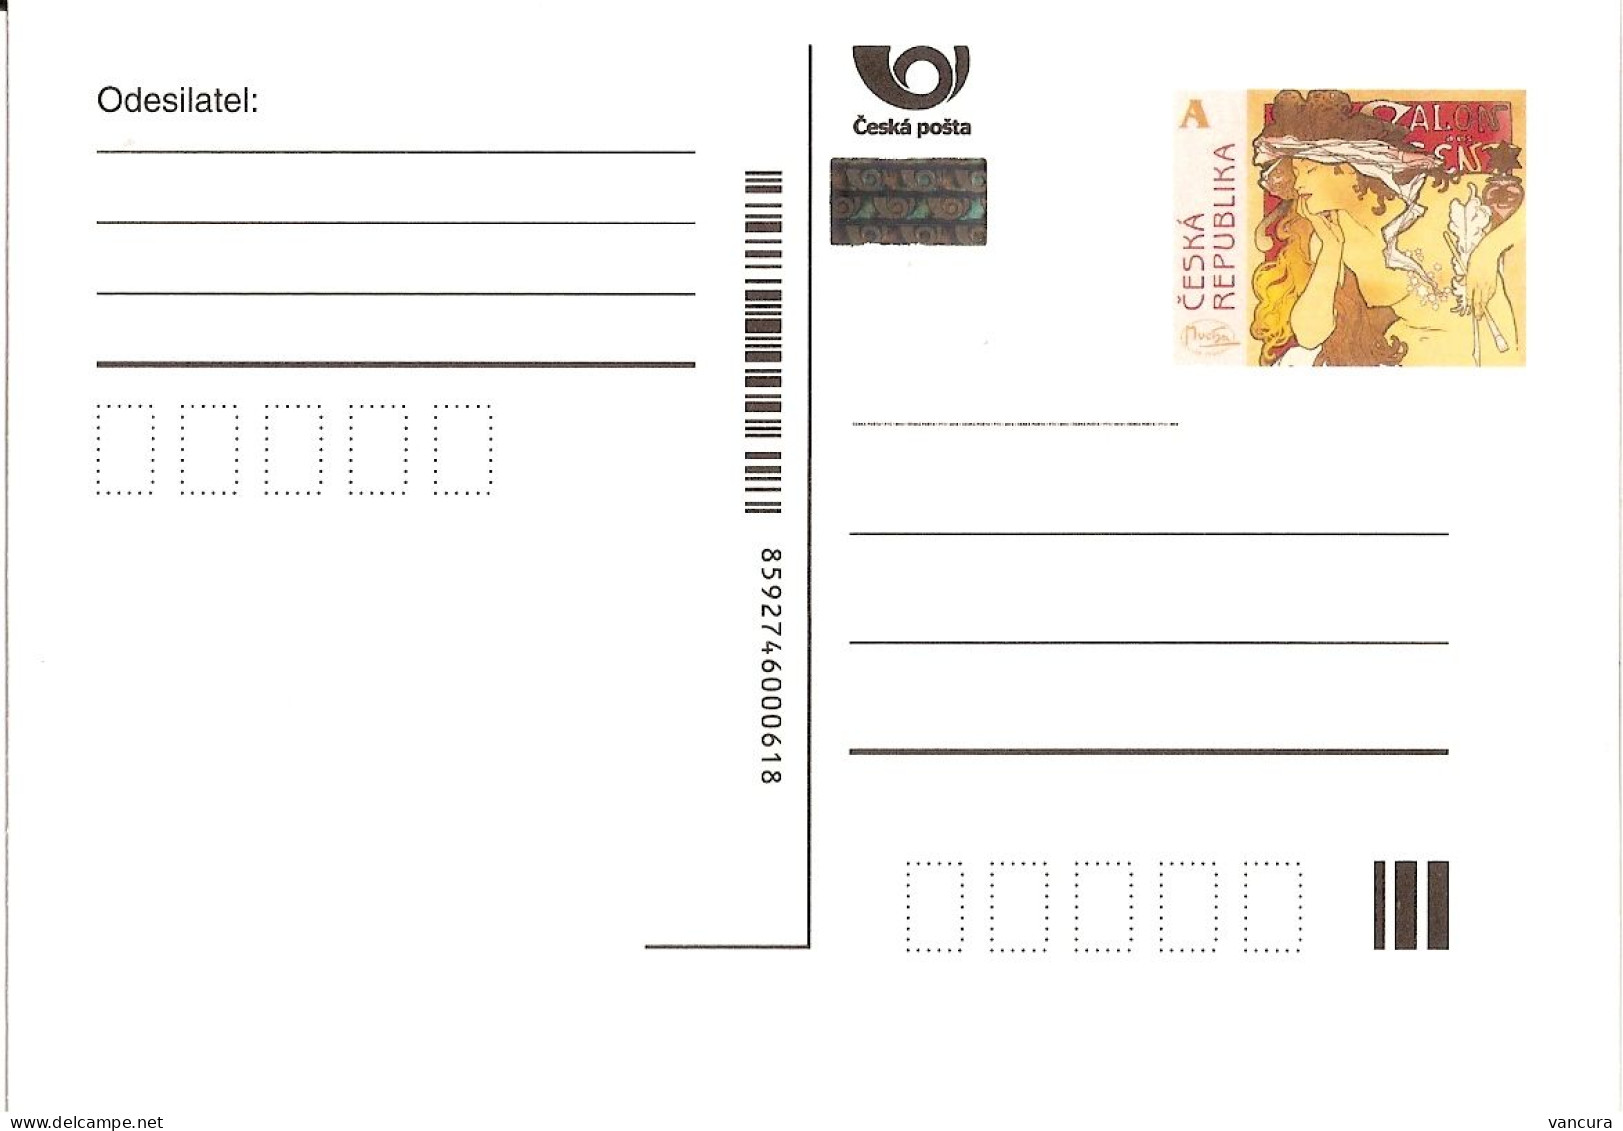 CDV 126 E Czech Republic Mucha - Different Position Of Hologram 2012 - Postcards